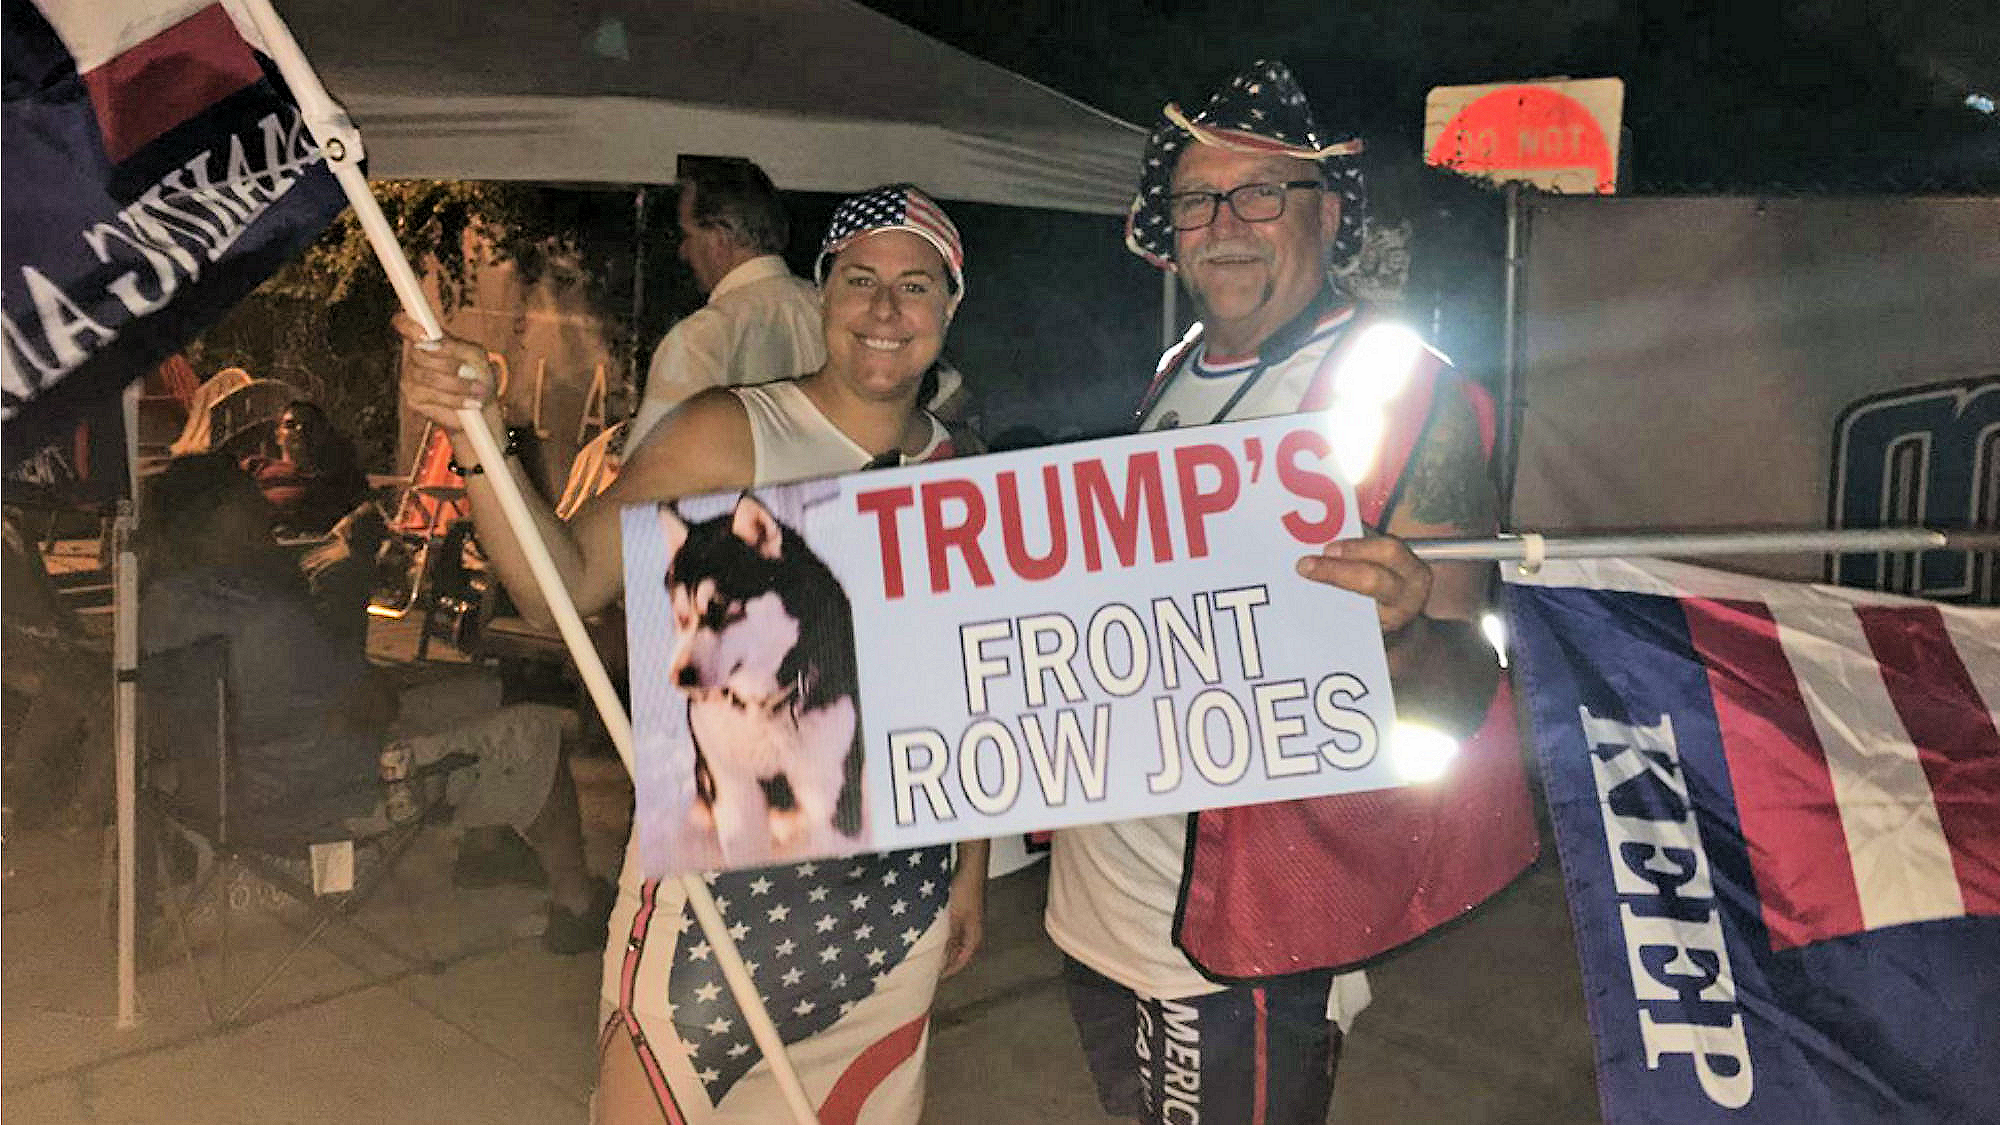 nightime camping out Trump 2020 rally Orlando